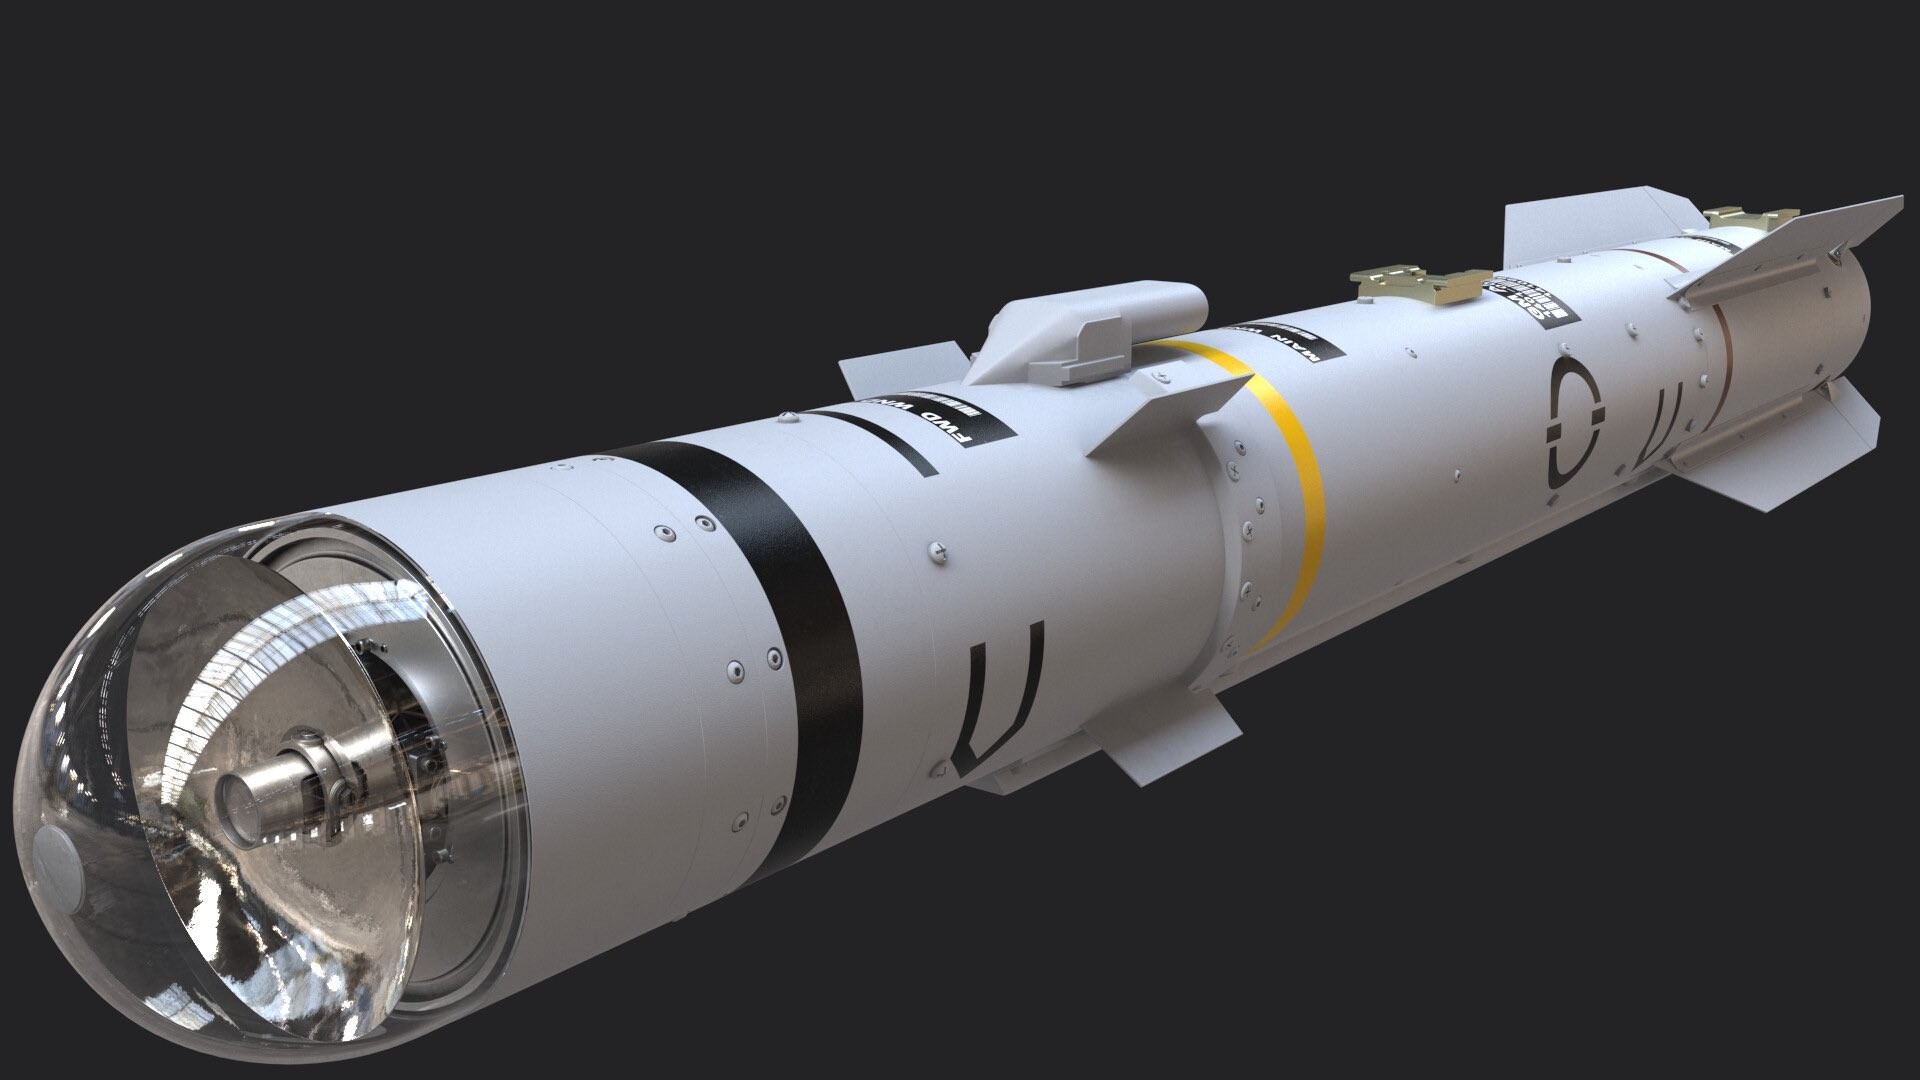 laser-guided Brimstone missile